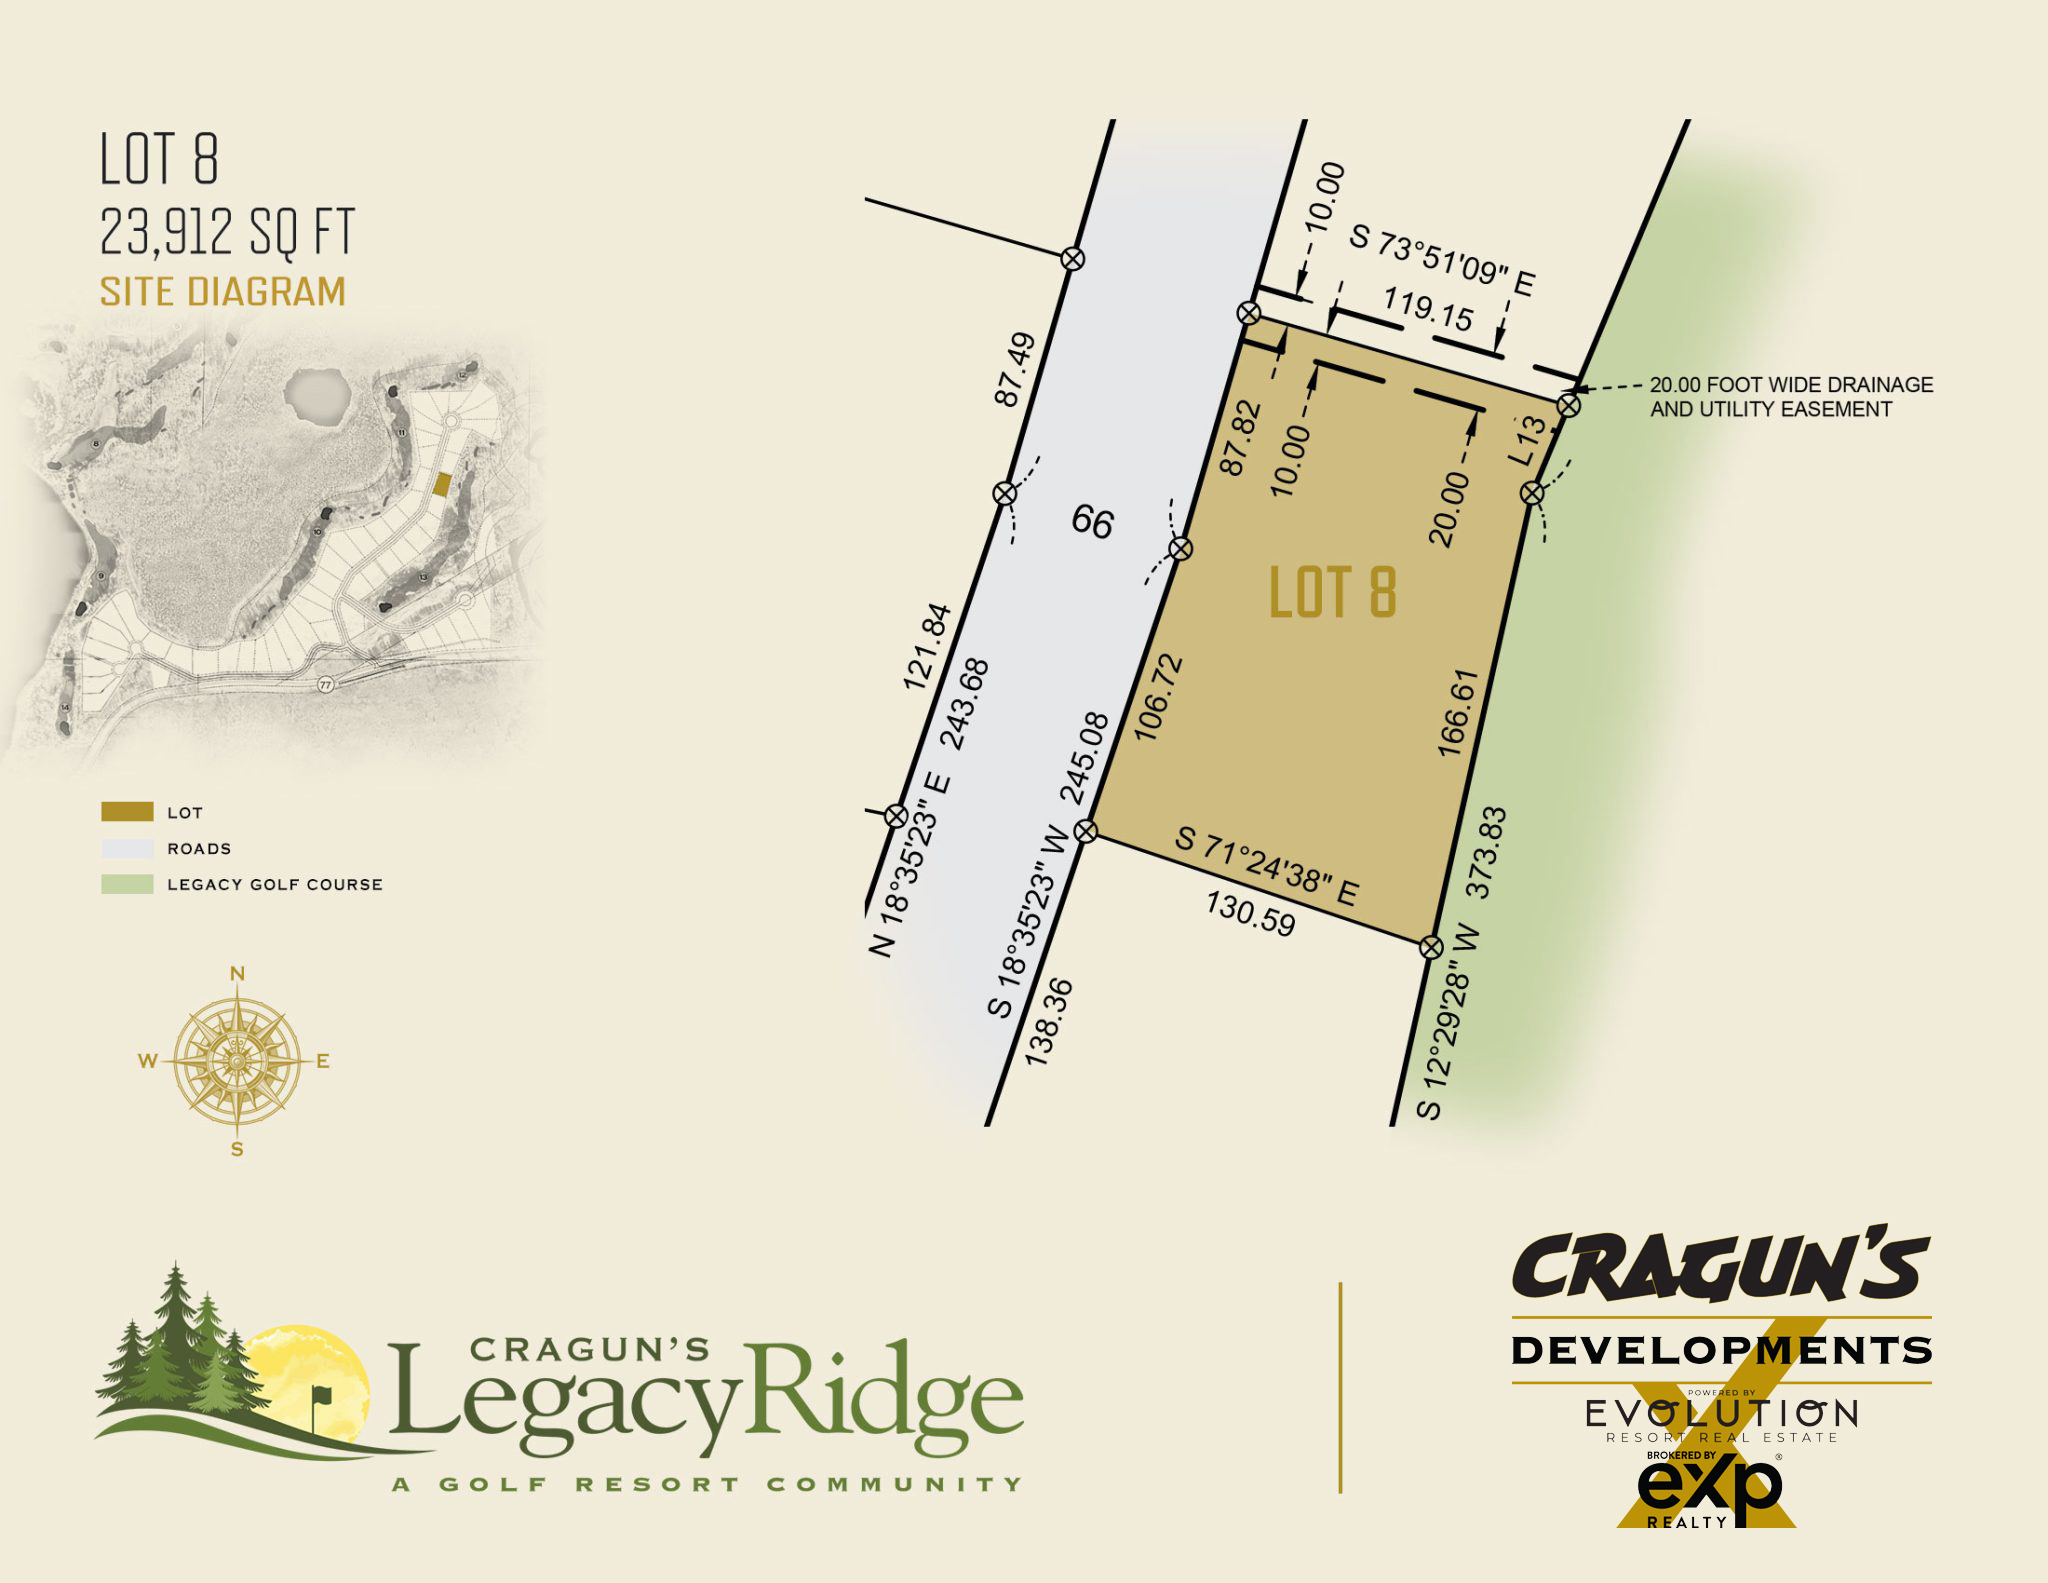 Legacy Ridge Lot 8 at Cragun's Developments in Brainerd, MN